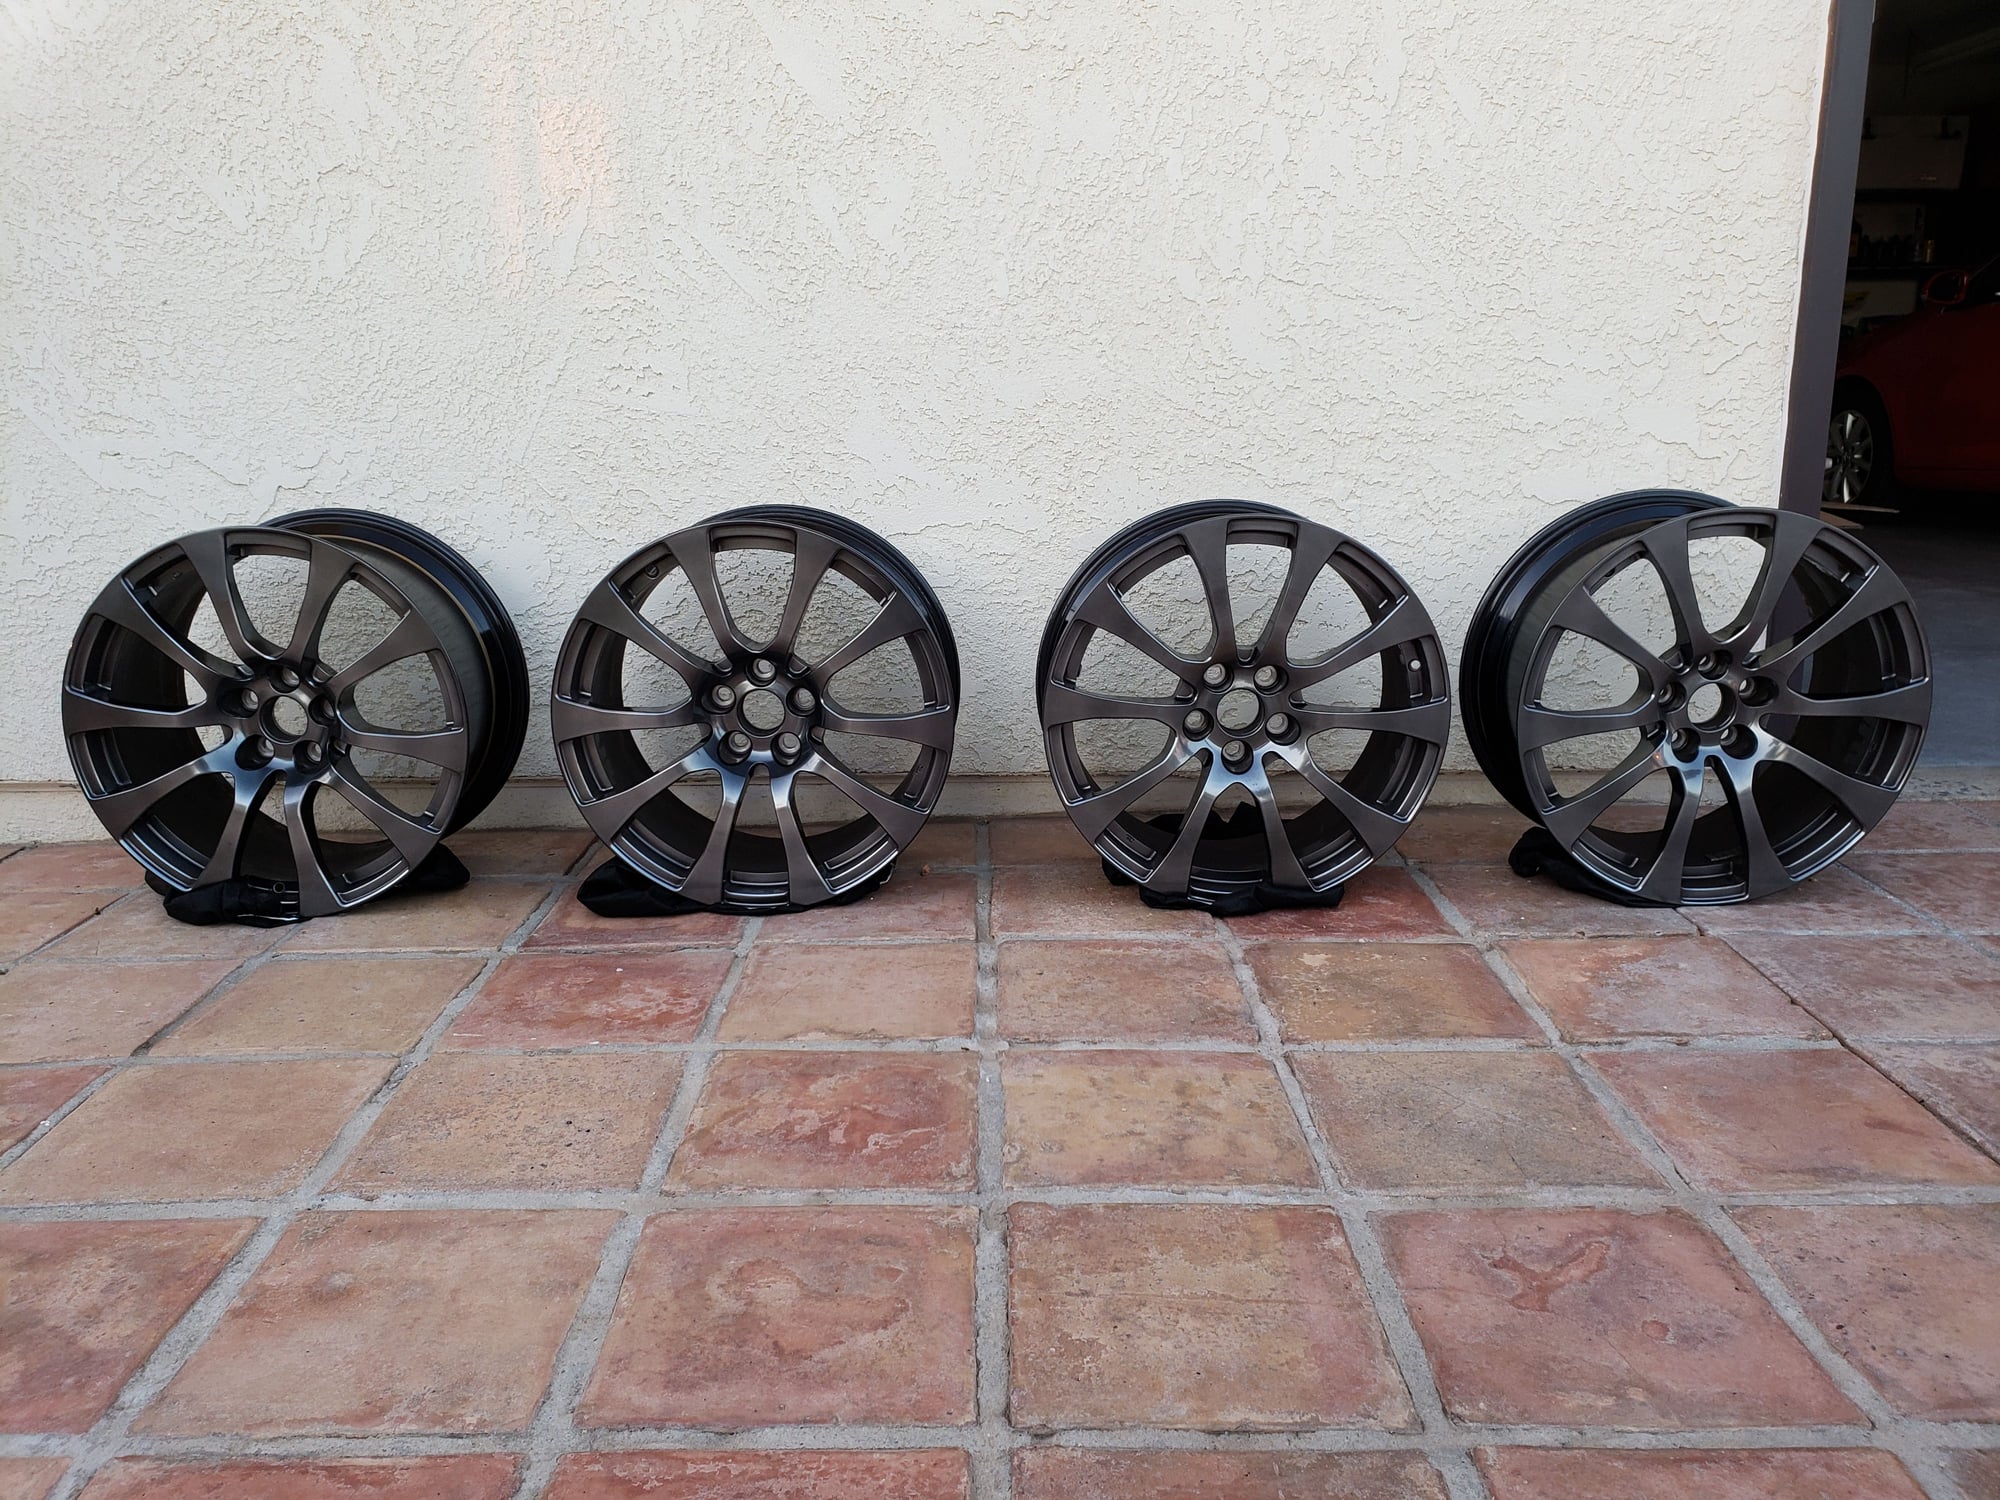 Wheels and Tires/Axles - Lexus RC F OEM 19" wheels - Used - Temecula, CA 92592, United States